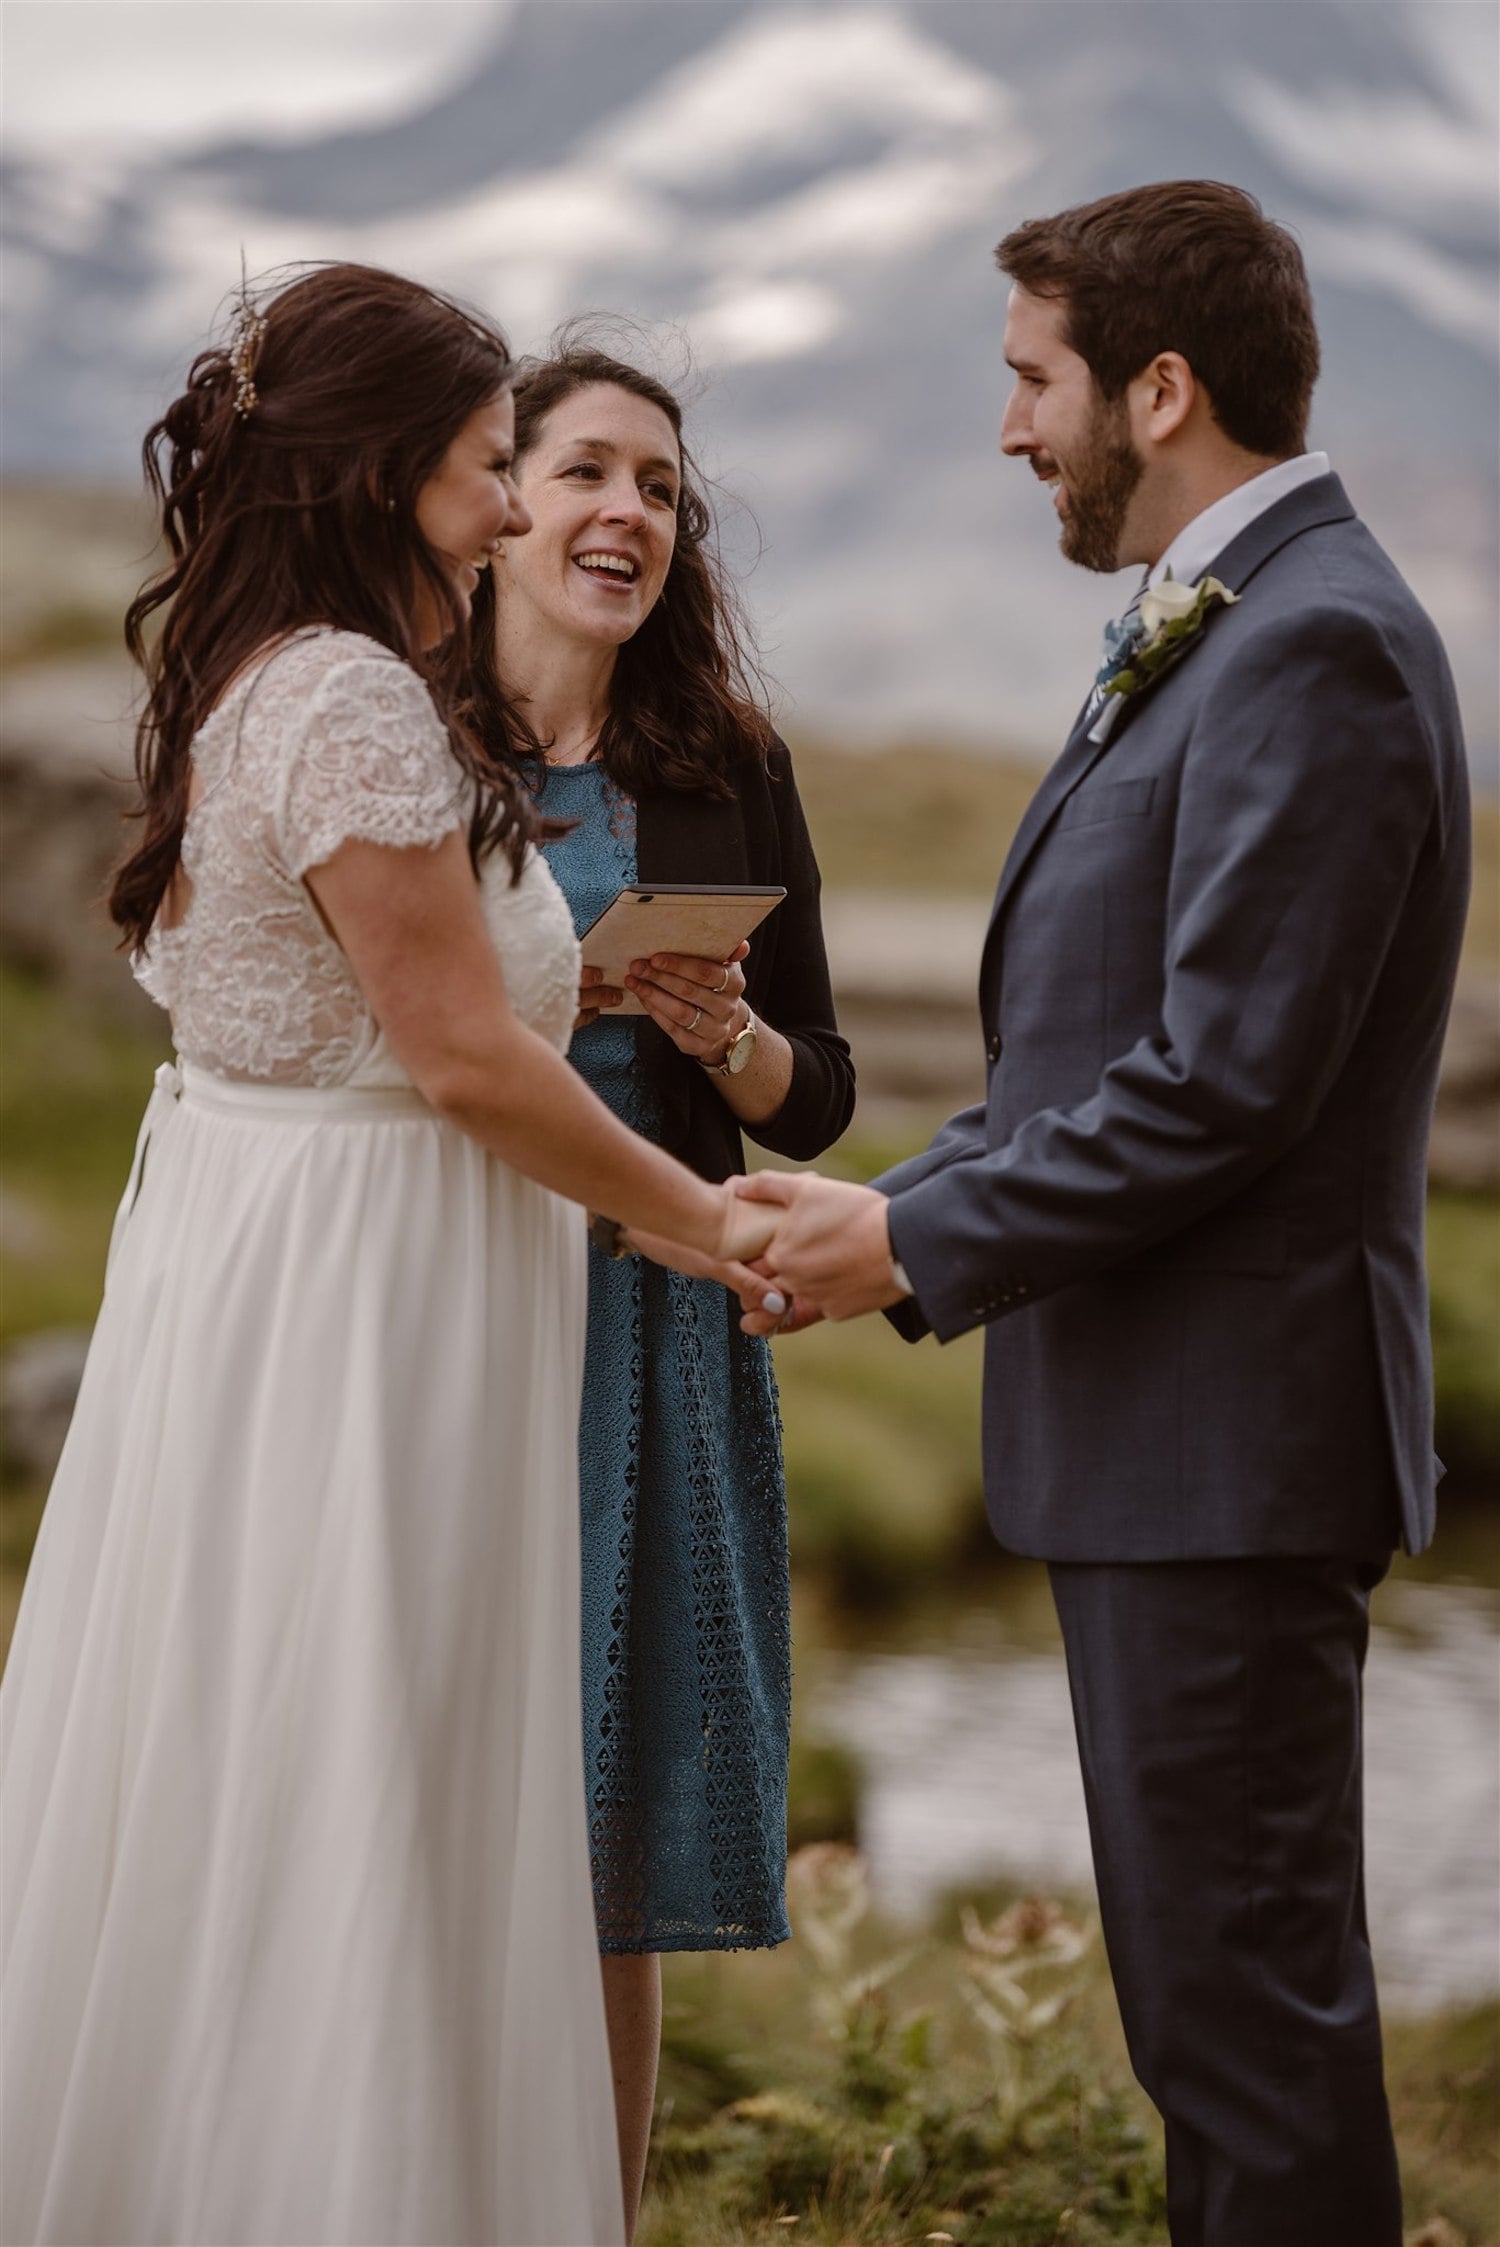 Wedding ceremony in Zermatt by Marylin Rebelo